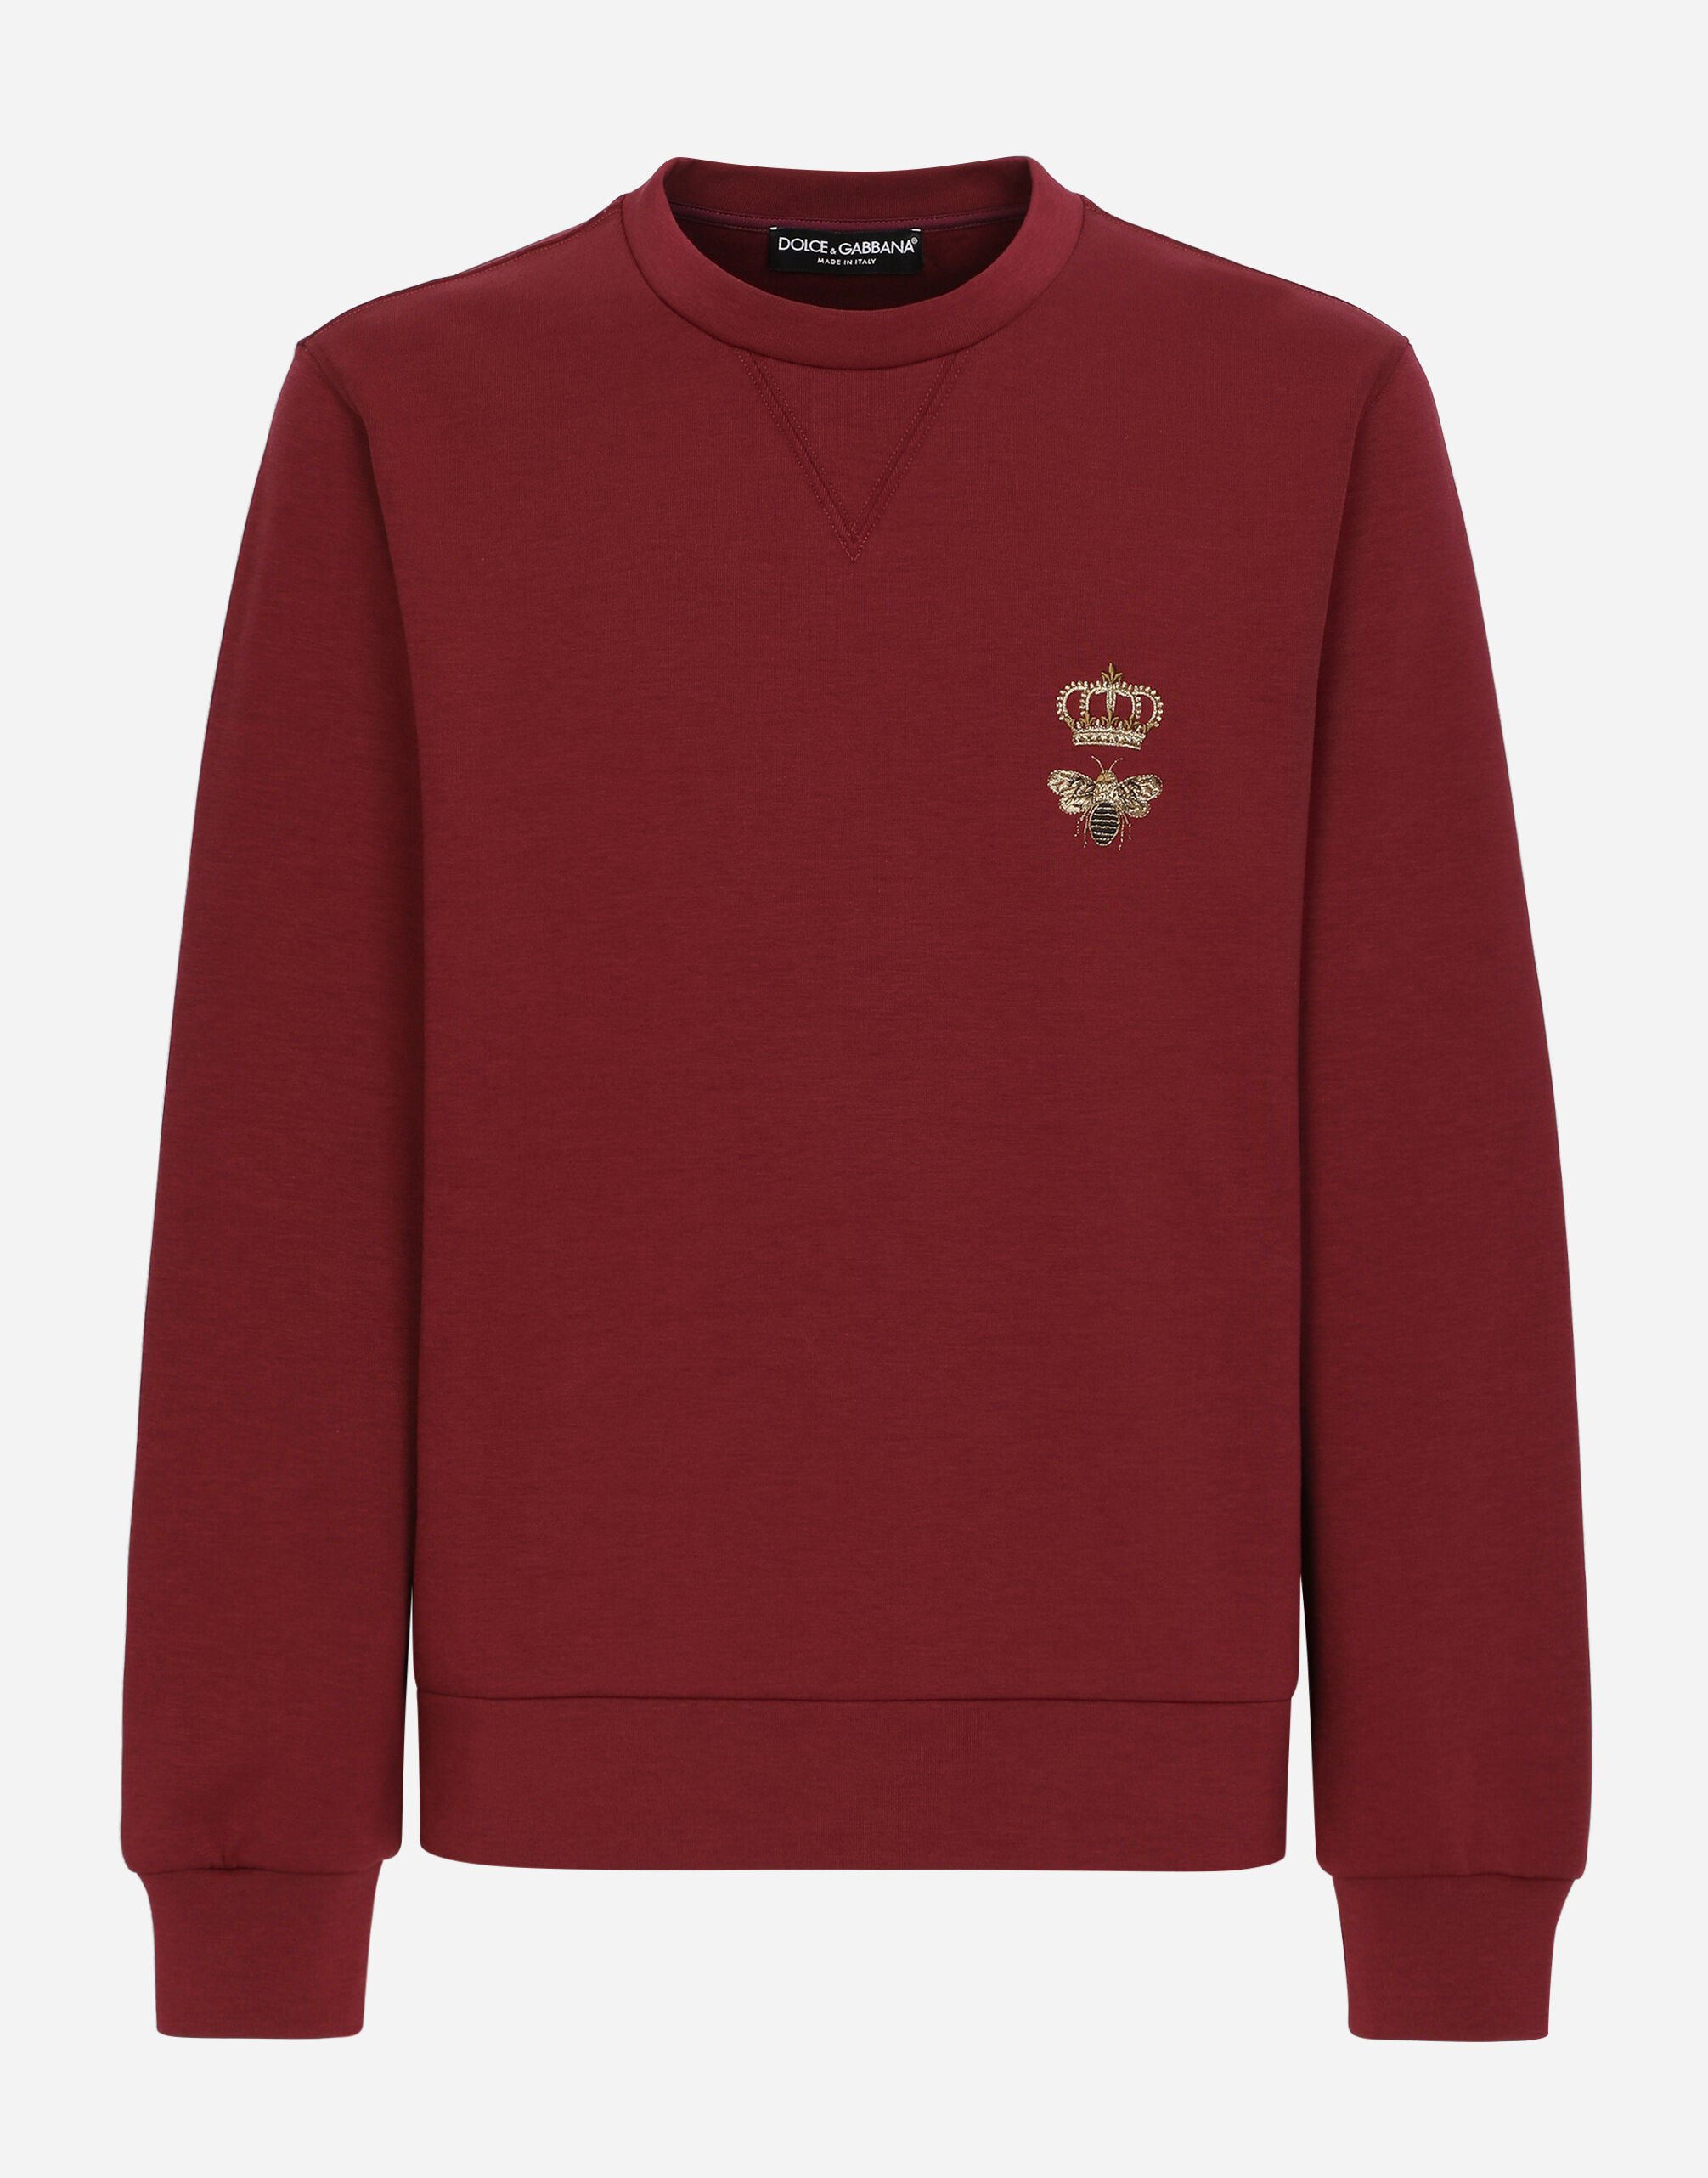 Dolce & Gabbana Cotton jersey sweatshirt with embroidery Black GXO39TJEMQ4